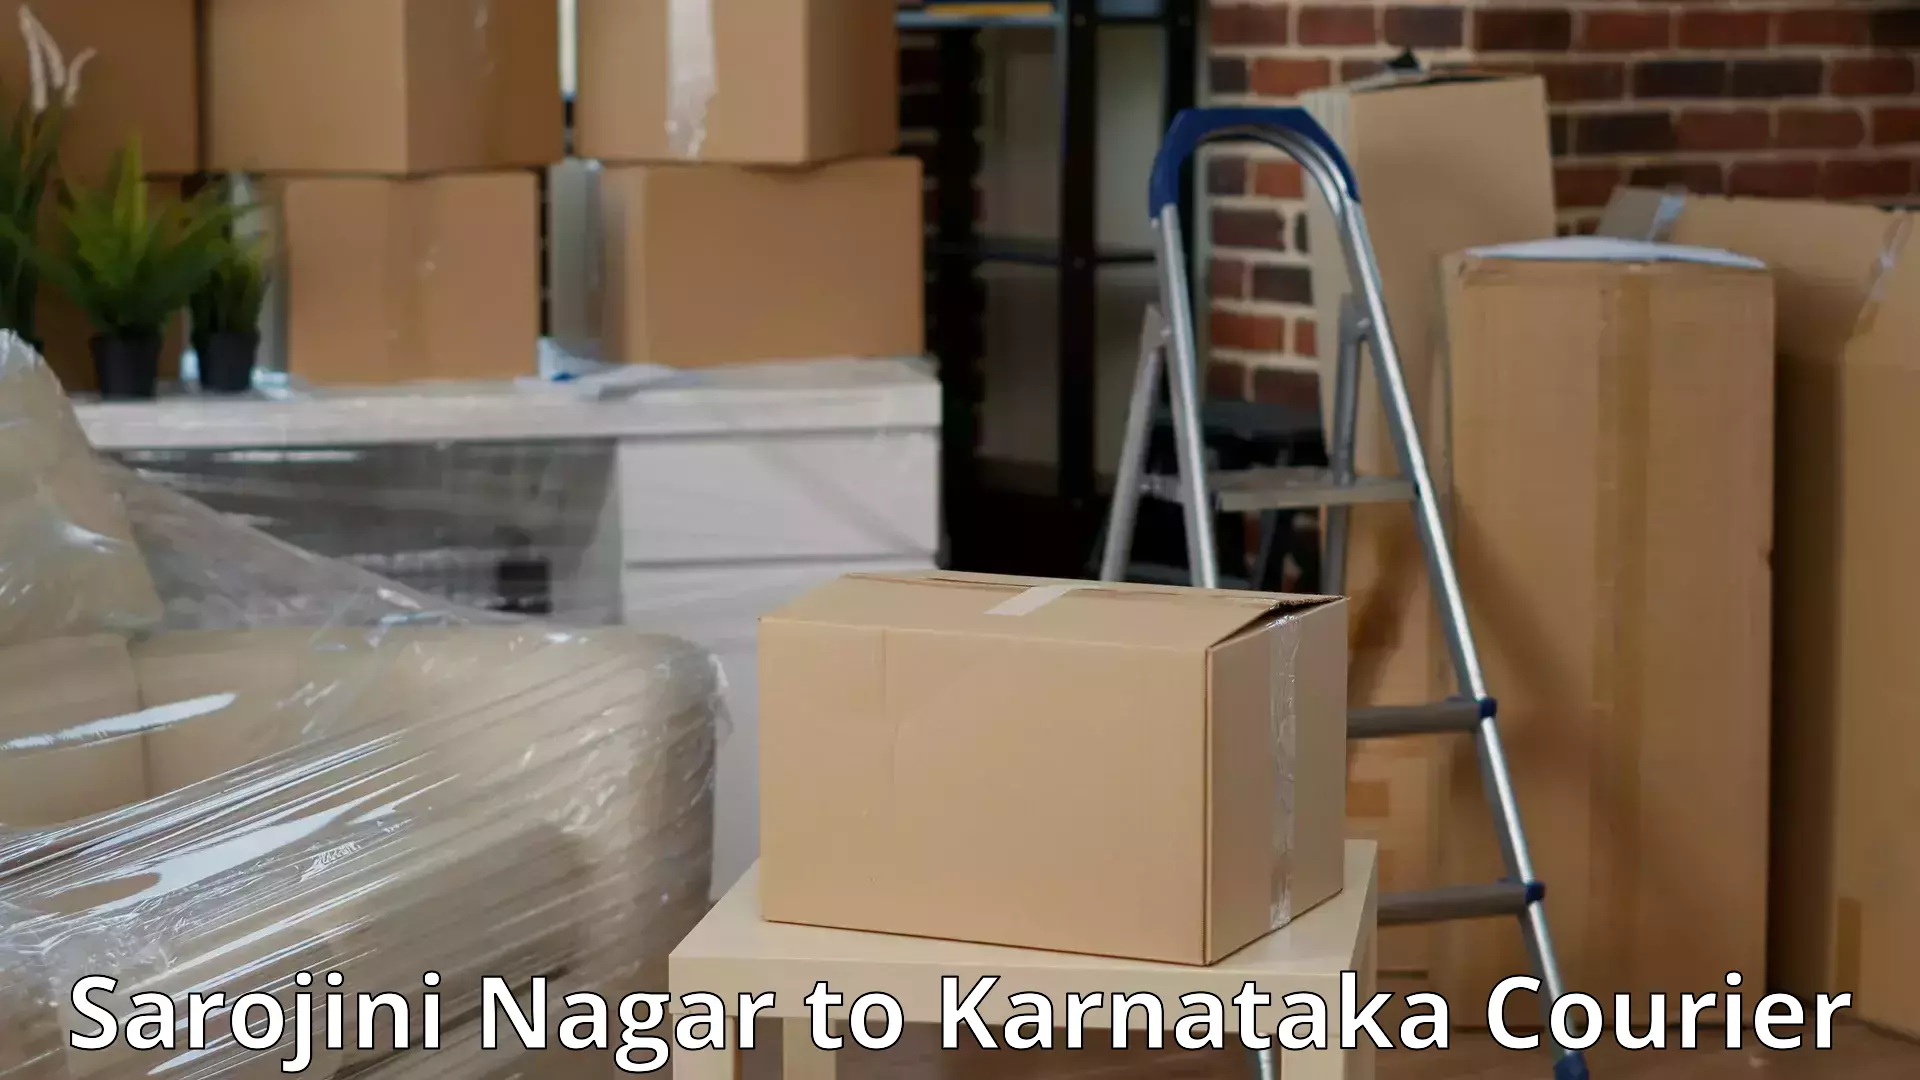 Efficient moving company Sarojini Nagar to Yellapur